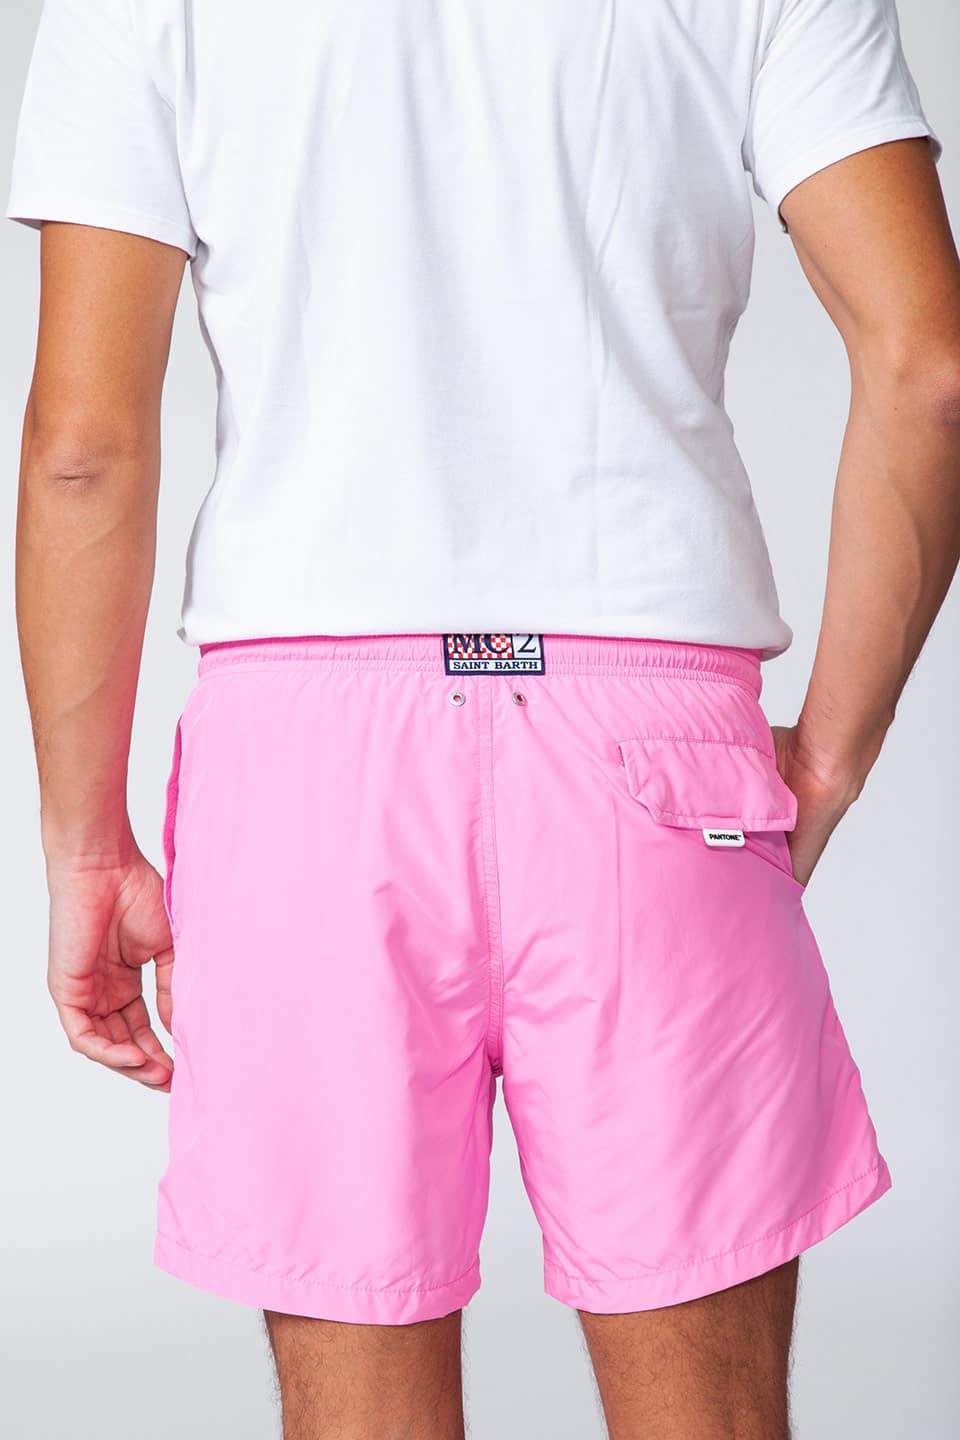 Thumbnail for Product gallery 6, MC saint barth male swimwear pantone pink detail